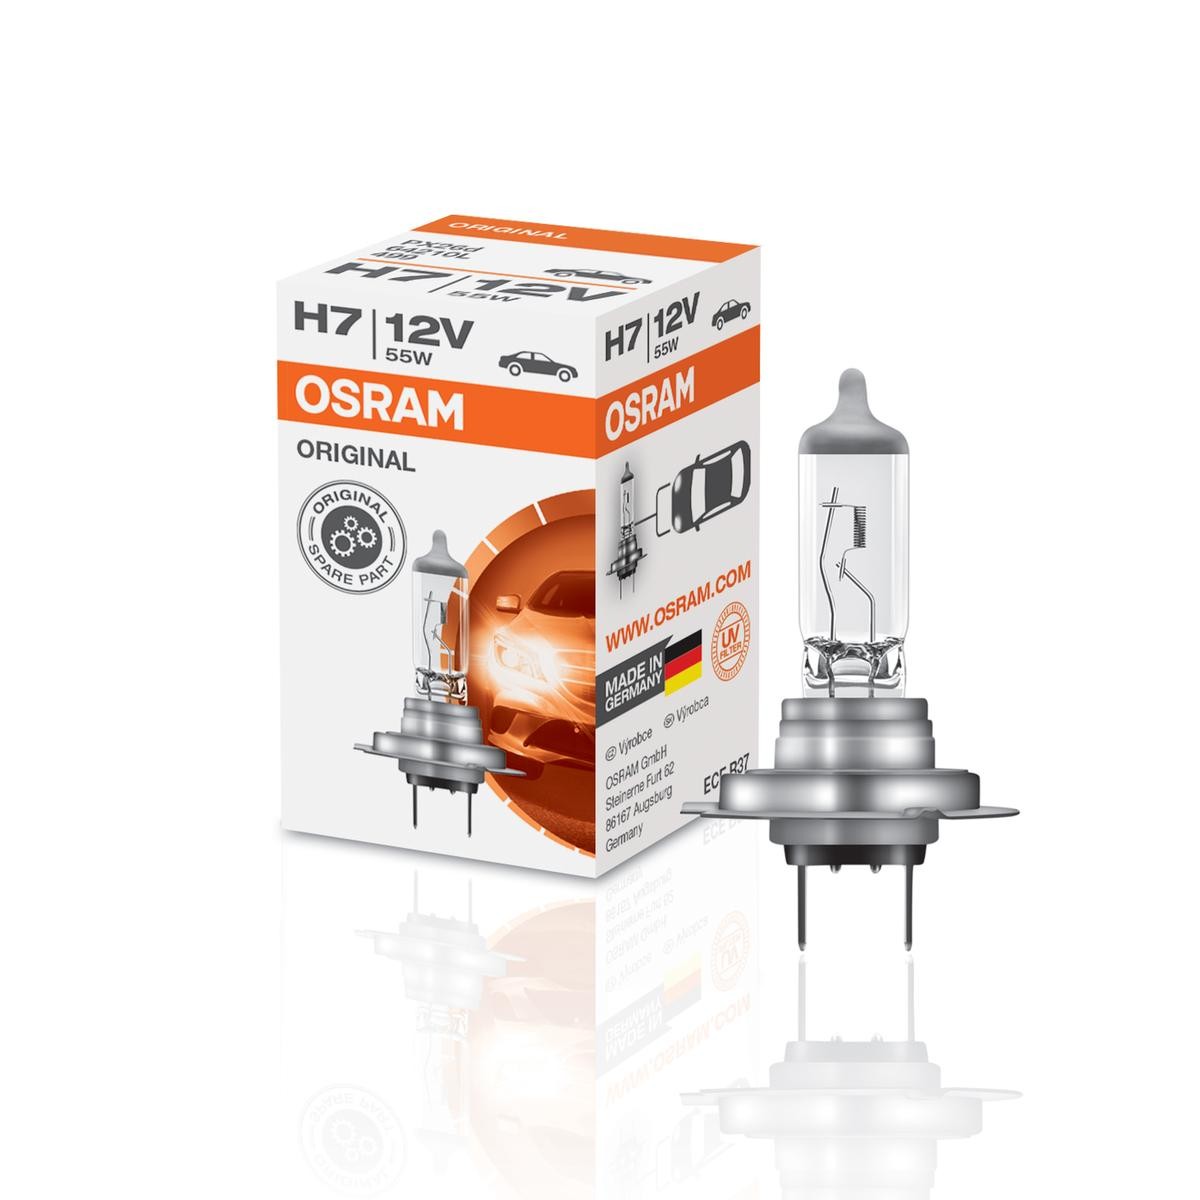 64210L LONG LIFE OSRAM H7 12V 55W lampe de phare de voiture